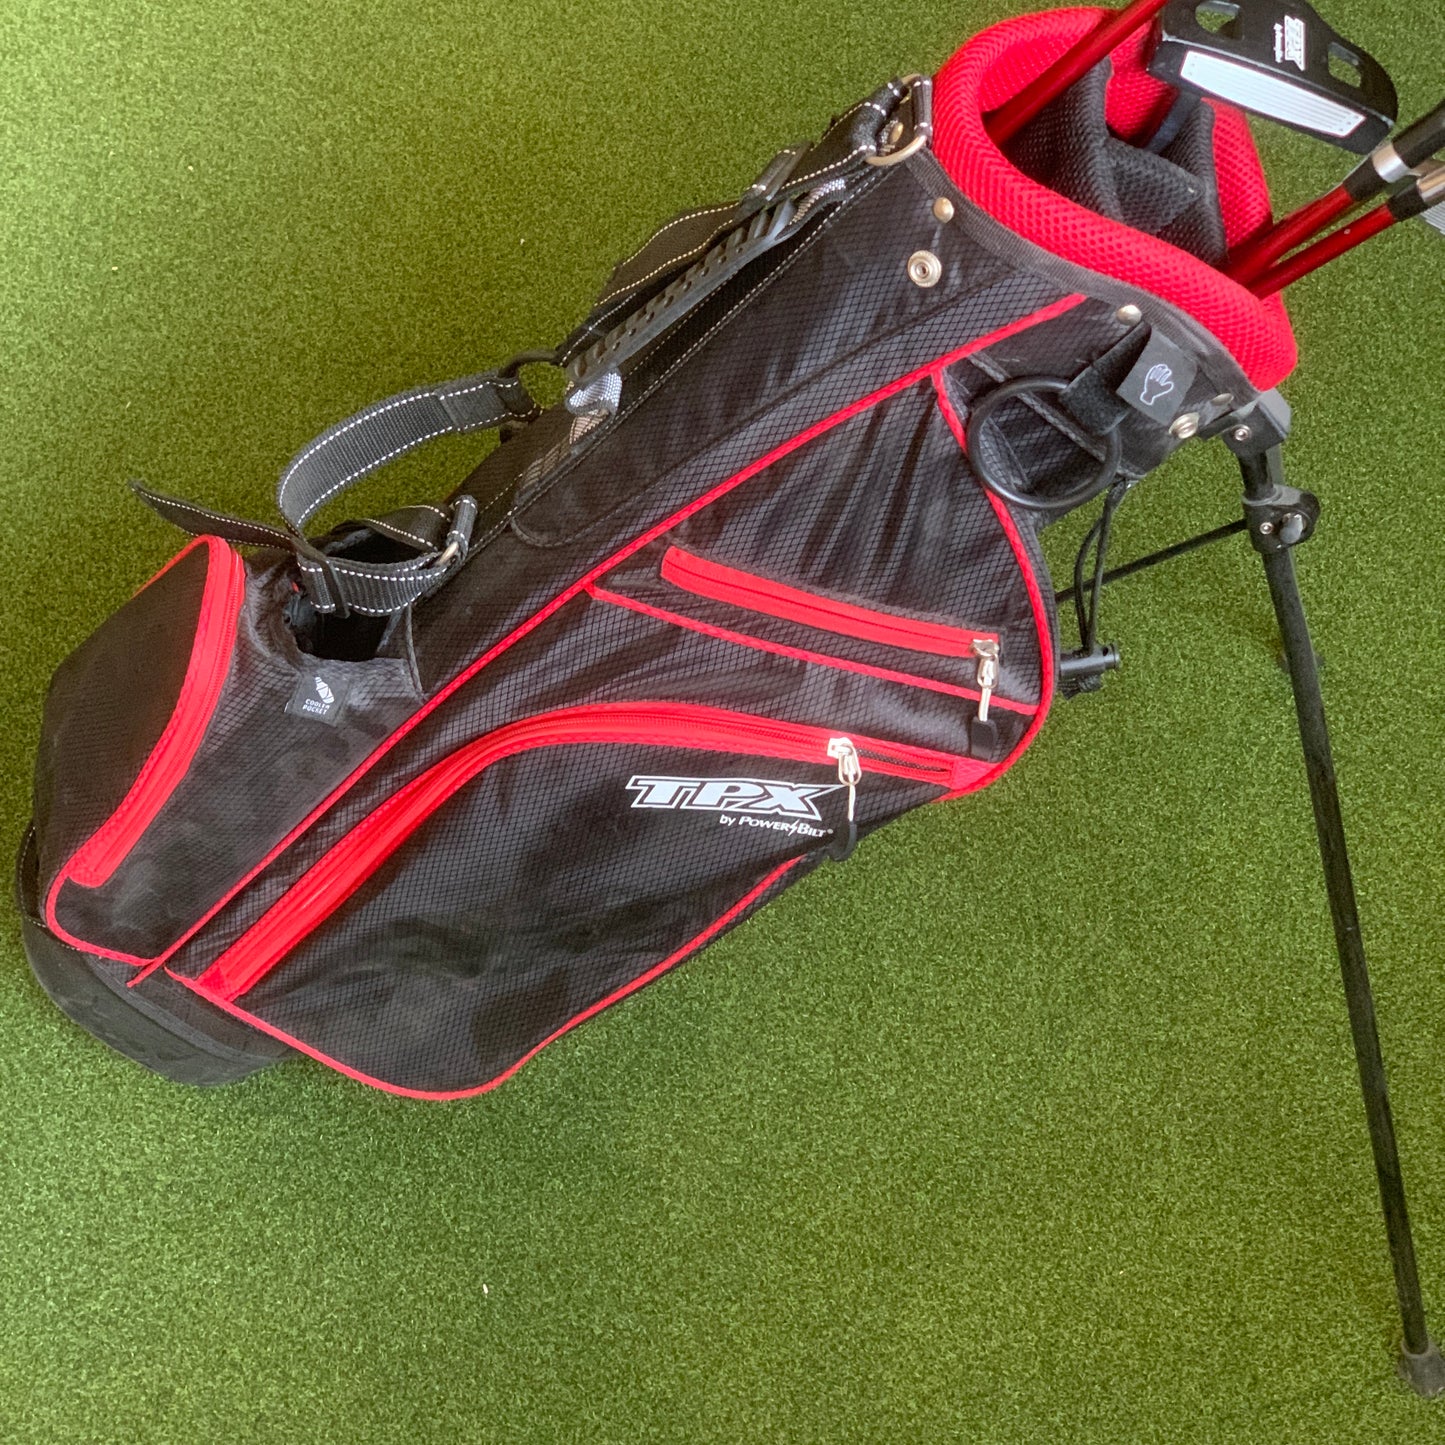 JR RH TPX By PowerBilt Golf Set (Age 13+)